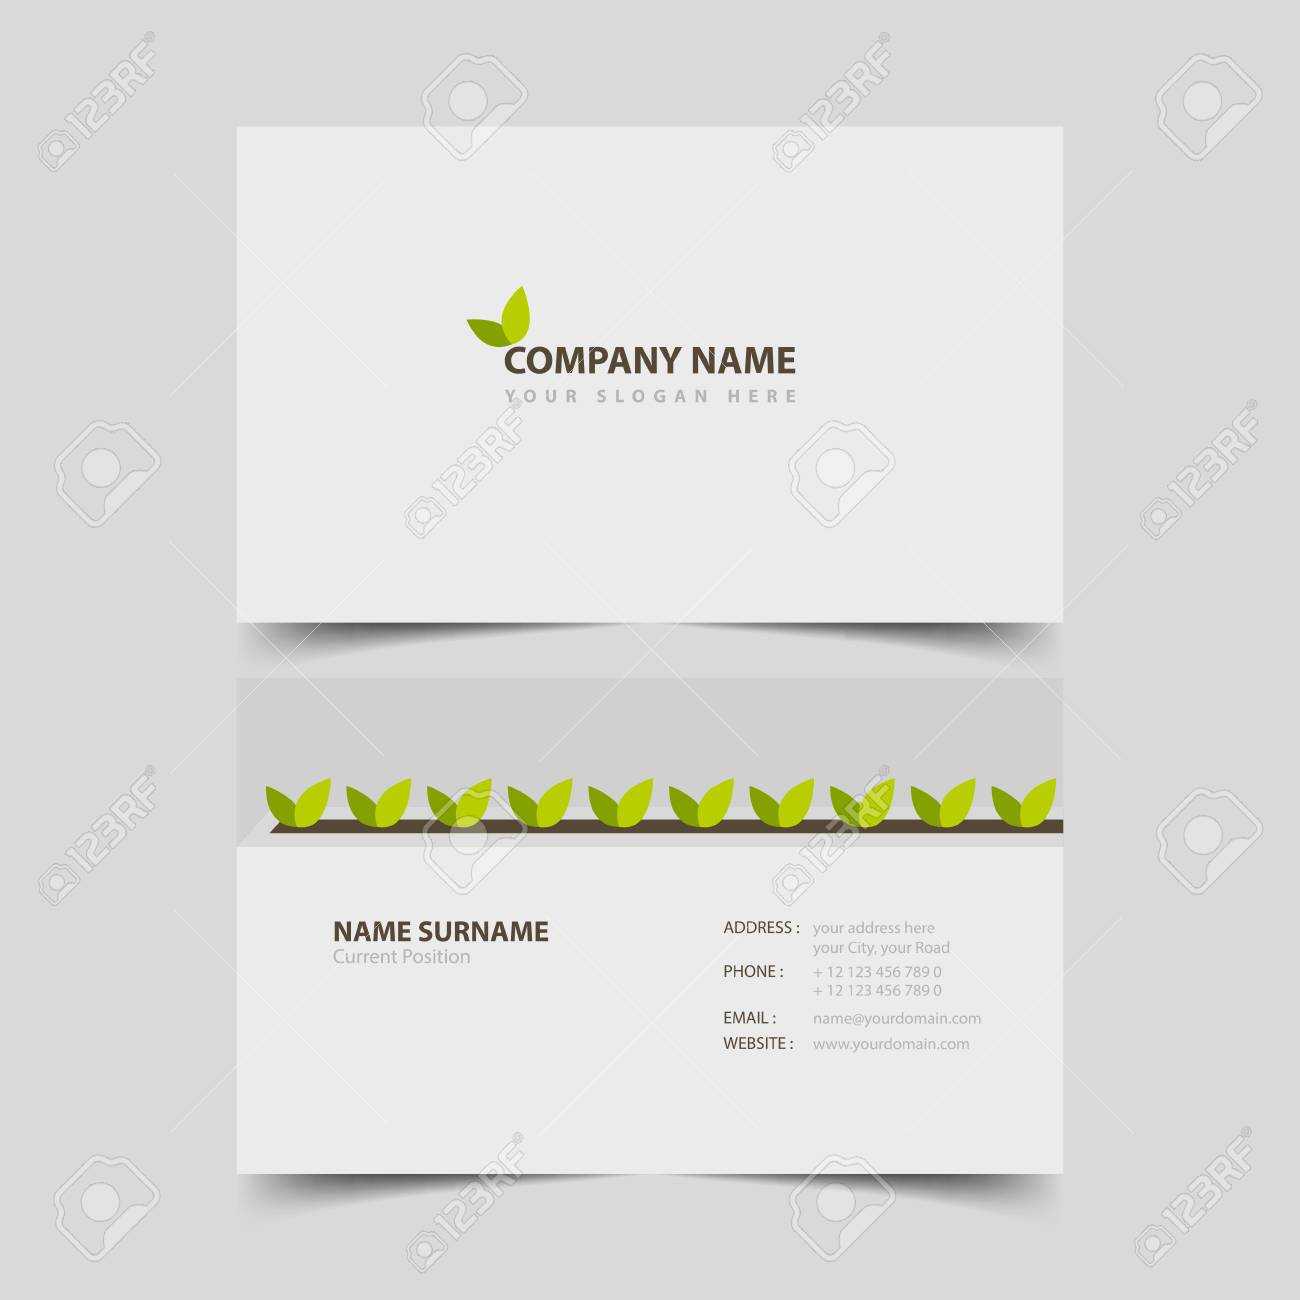 Gardener Business Card Design Template. Pertaining To Gartner Business Cards Template